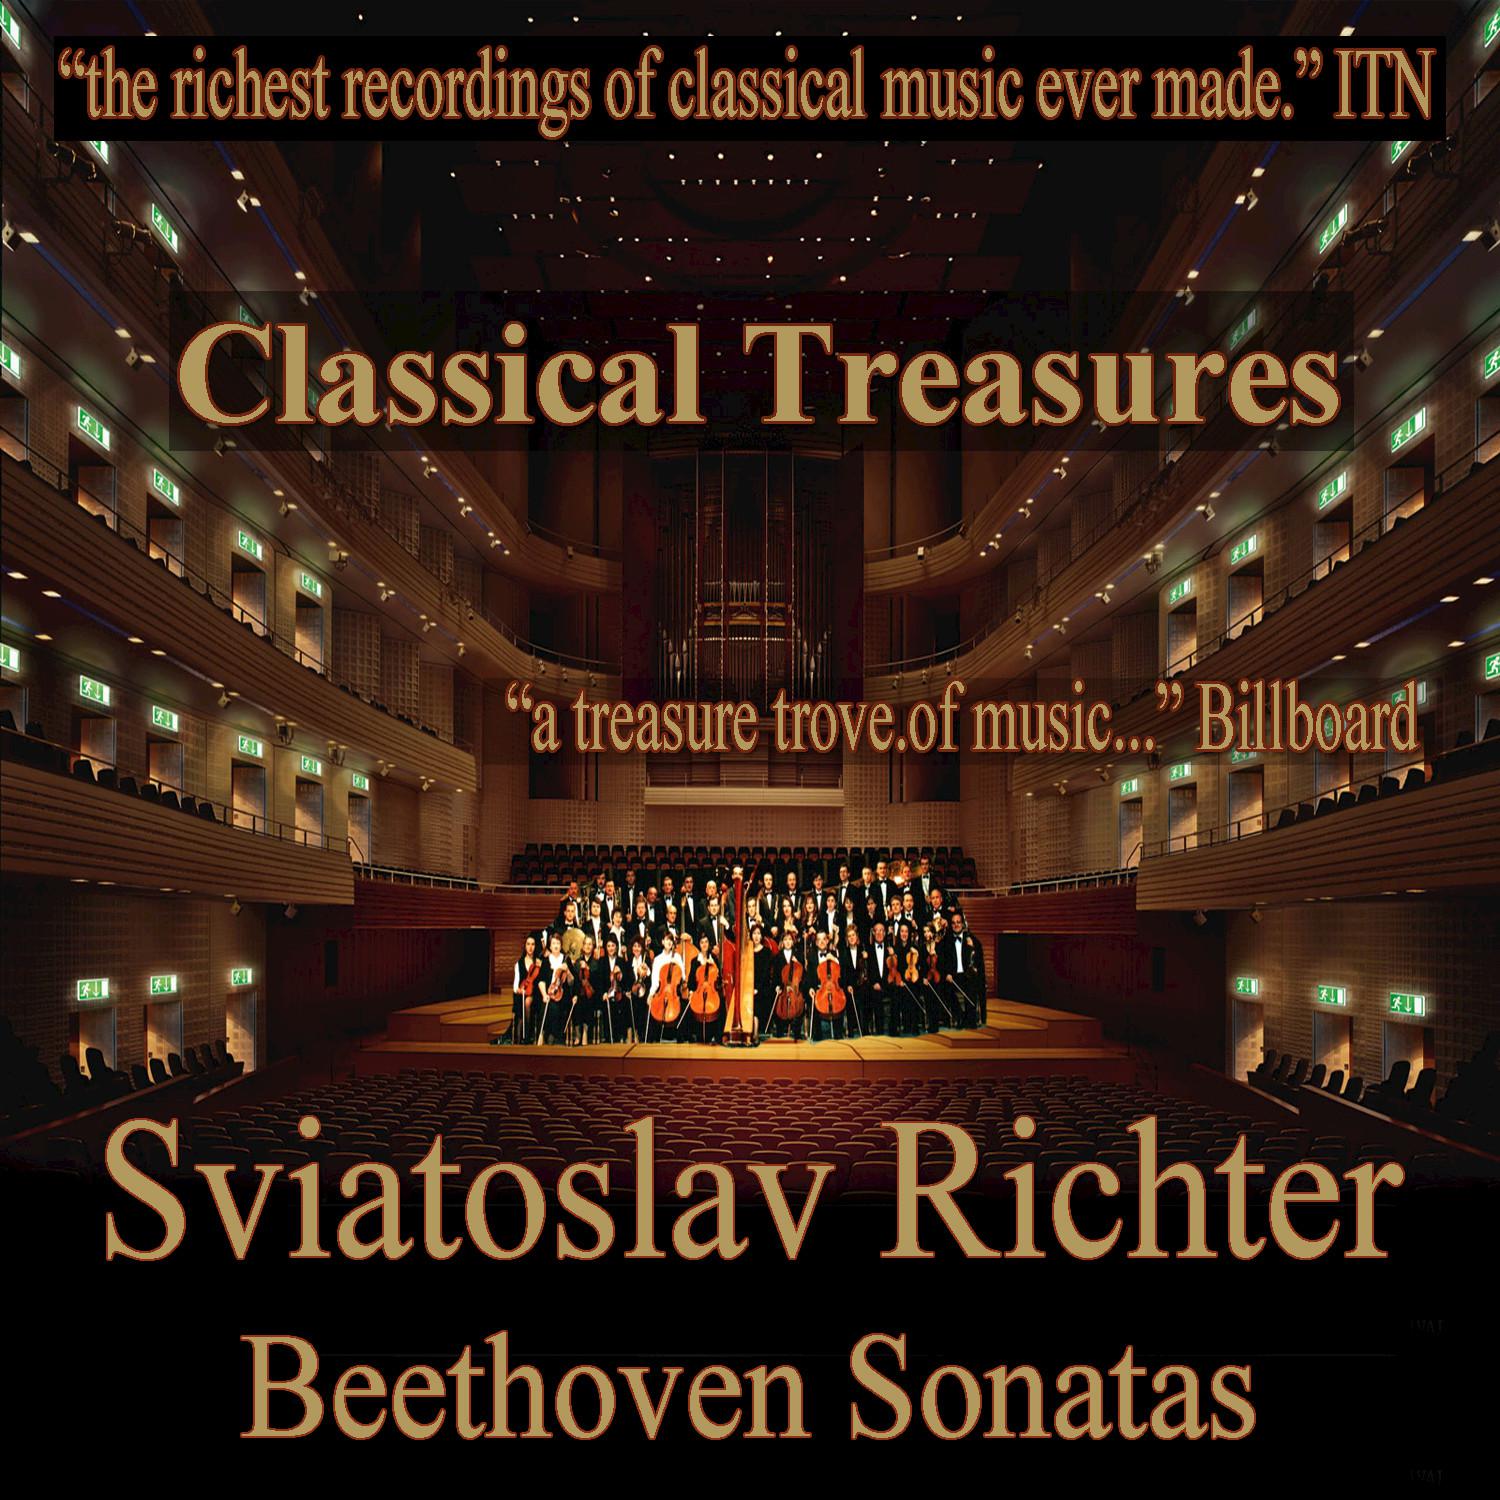 Sonata No. 18 in E-Flat Major, Op. 31-3: II. Scherzo allegro vivace